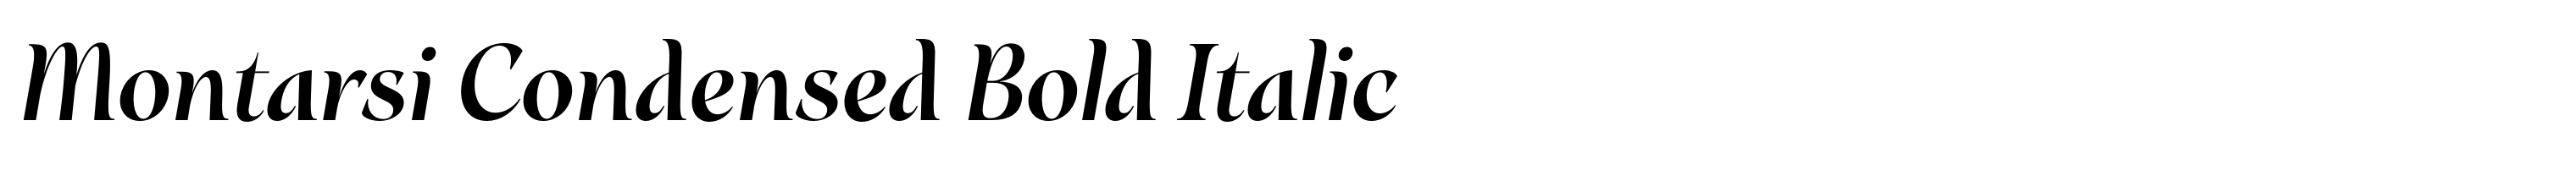 Montarsi Condensed Bold Italic